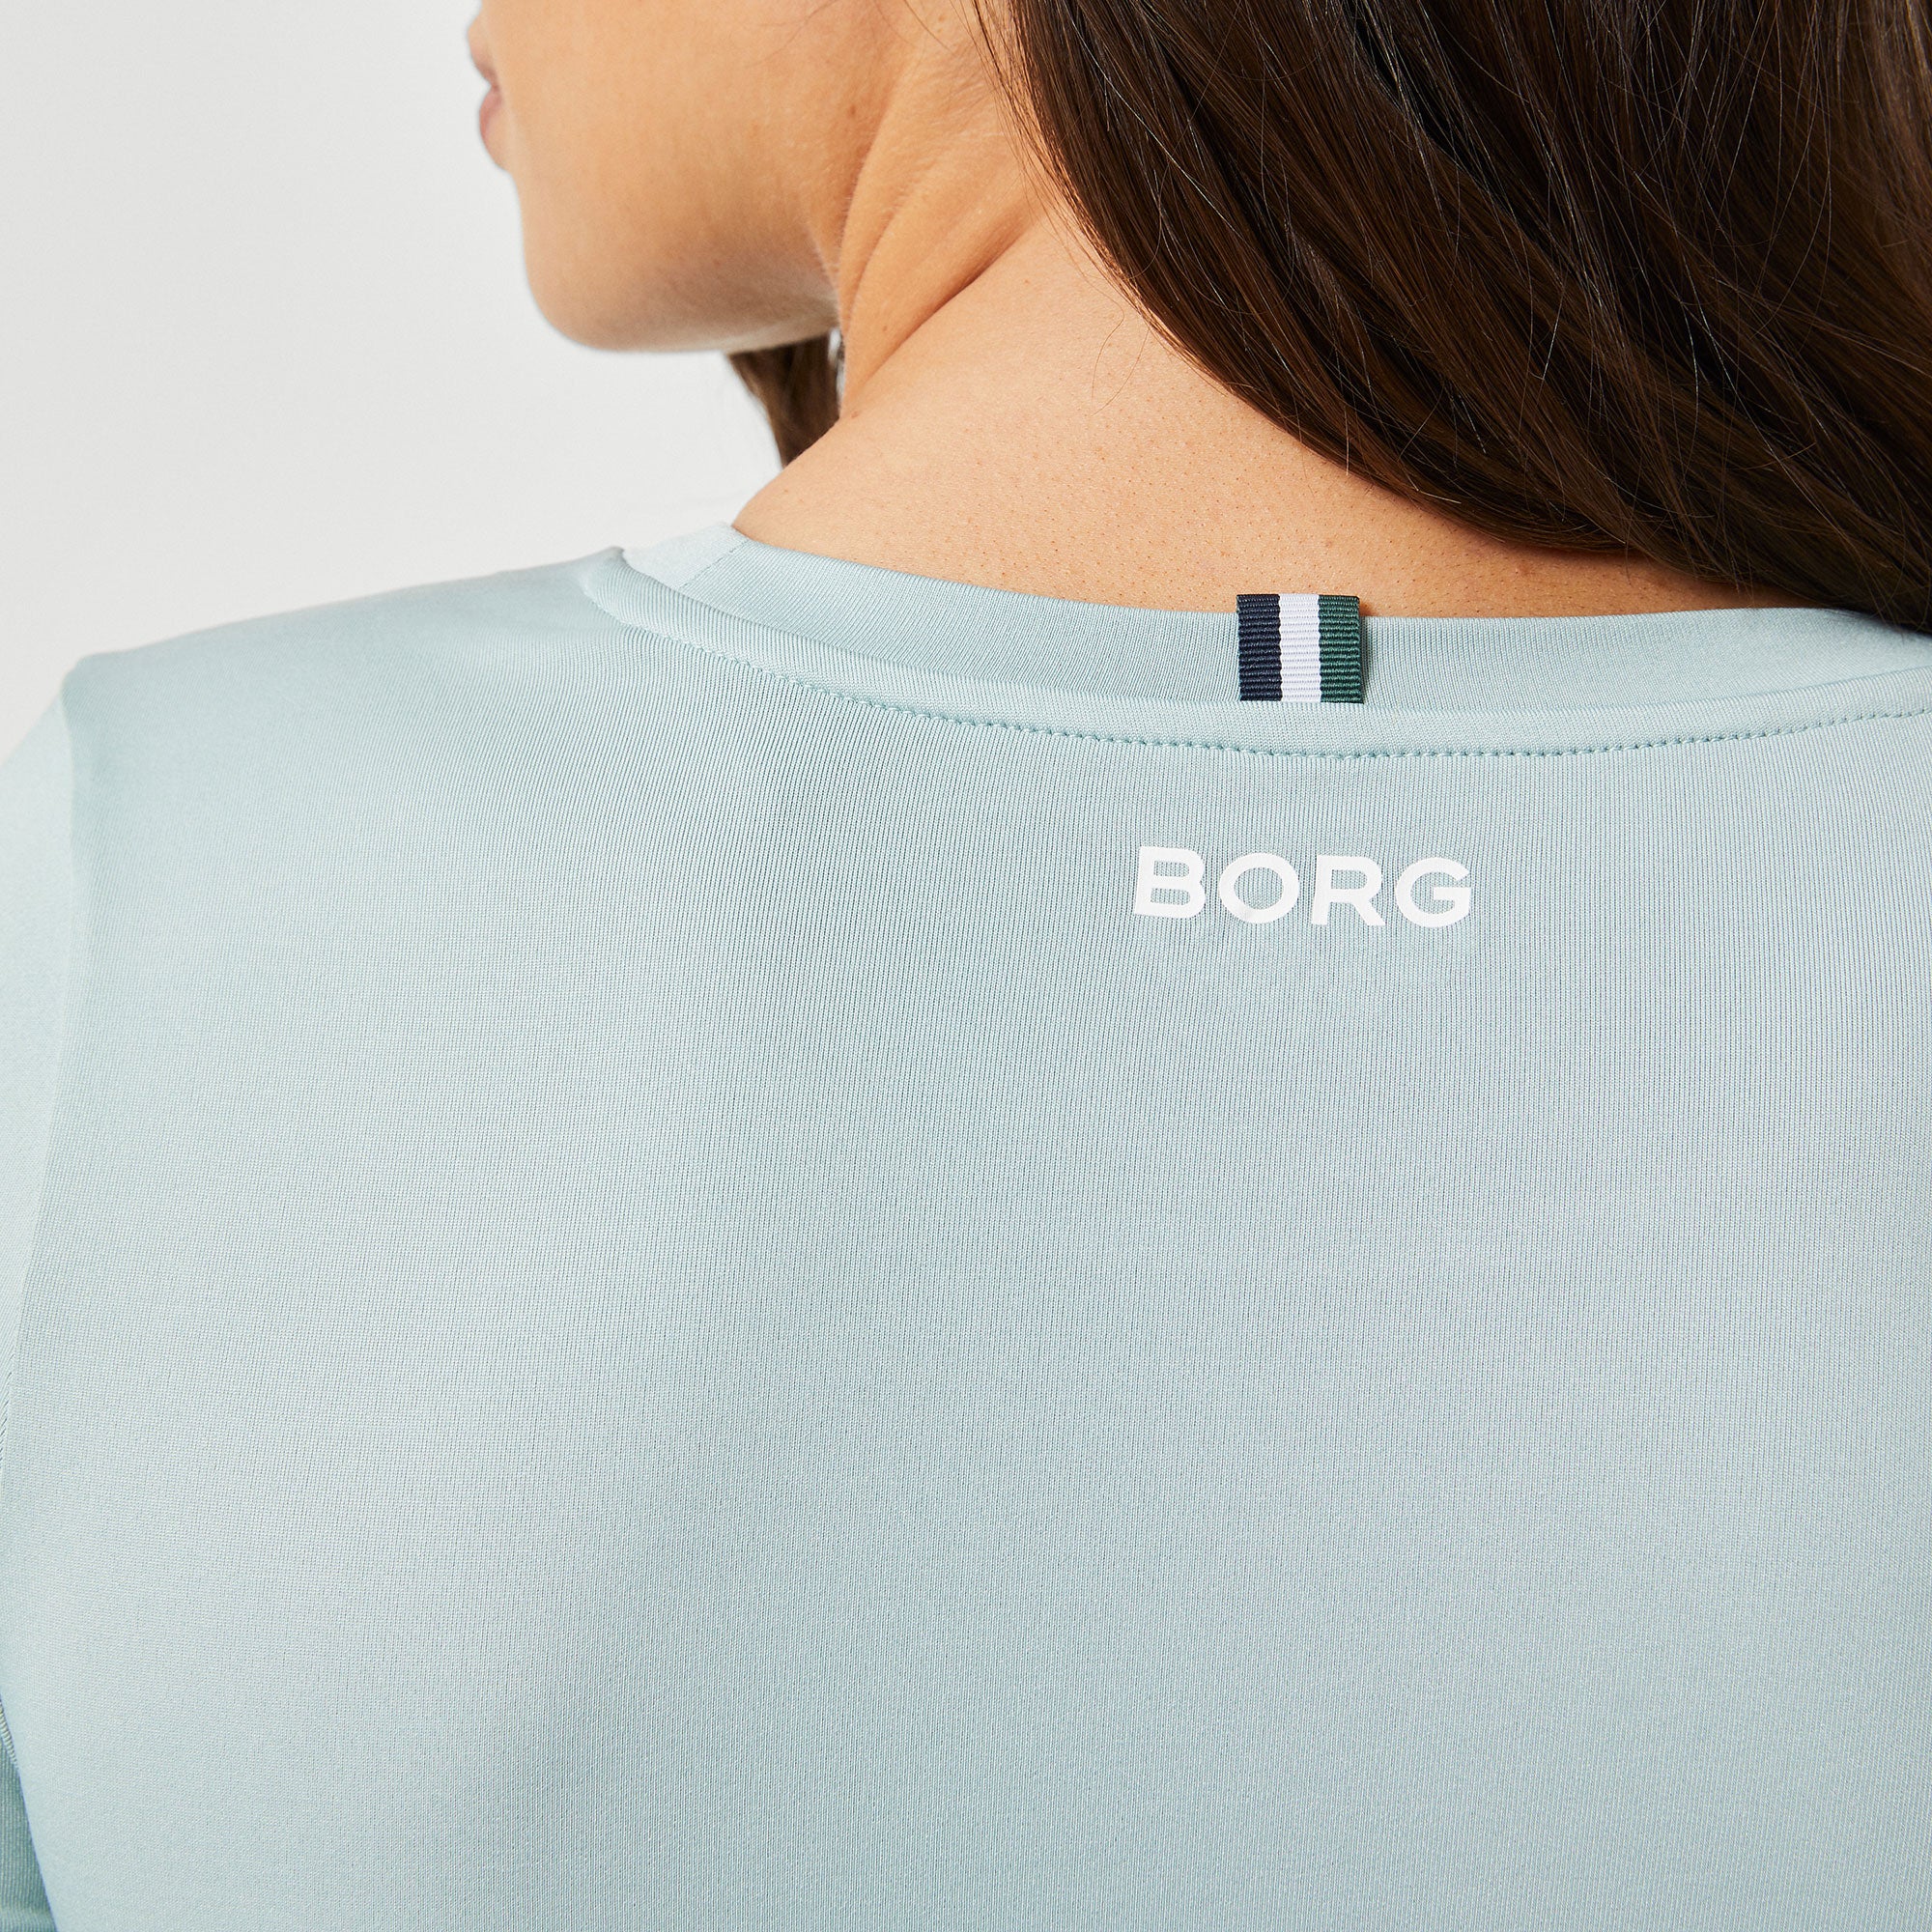 Björn Borg Ace Women's Slim Tennis Shirt - Blue (5)